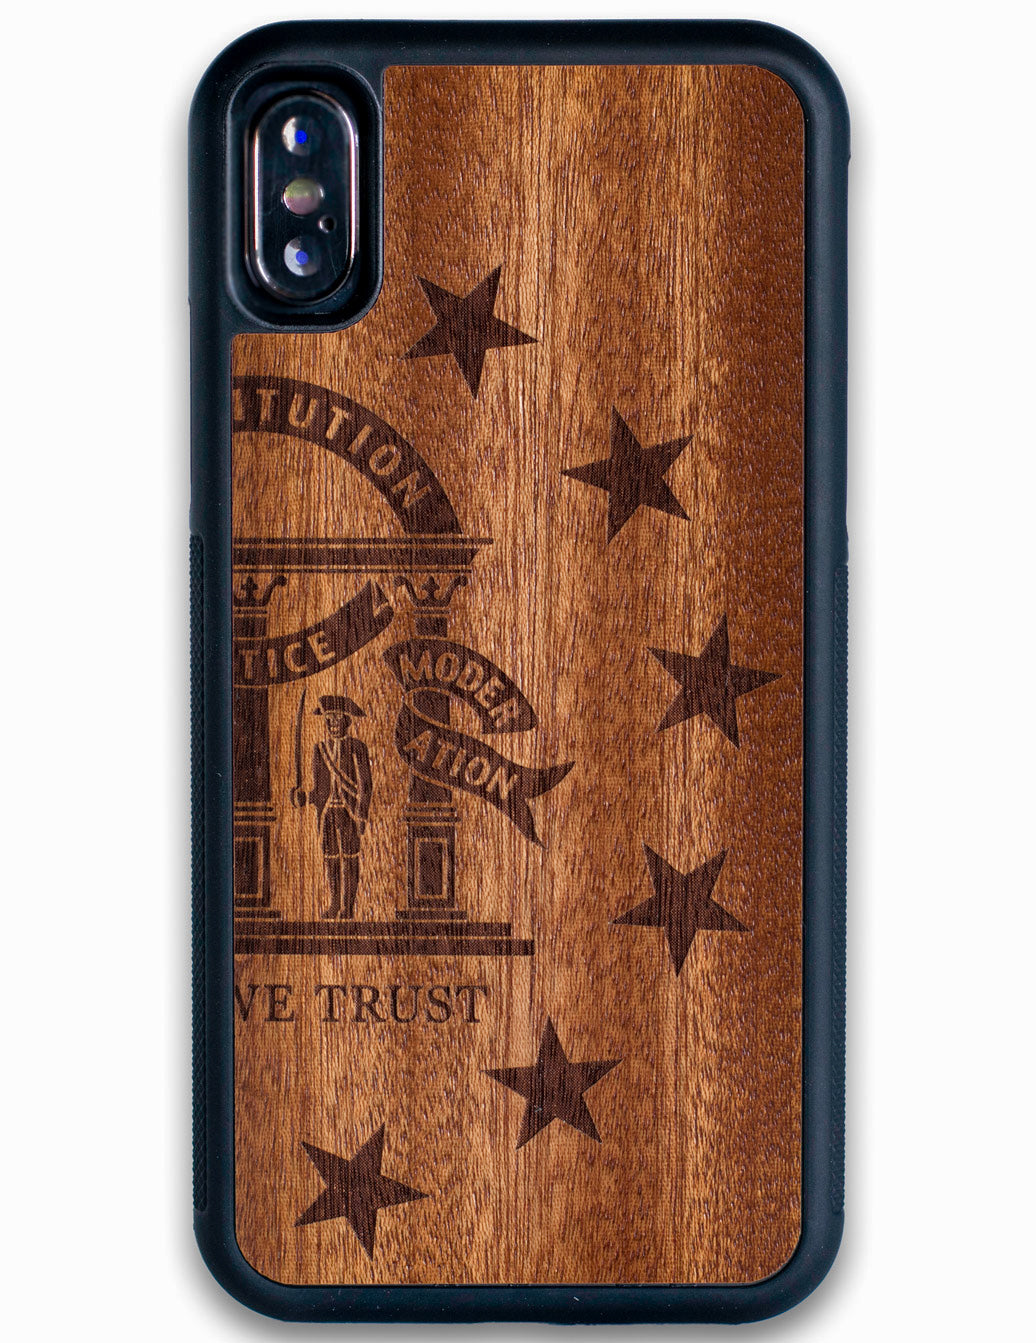 Georgia flag wooden iPhone X case